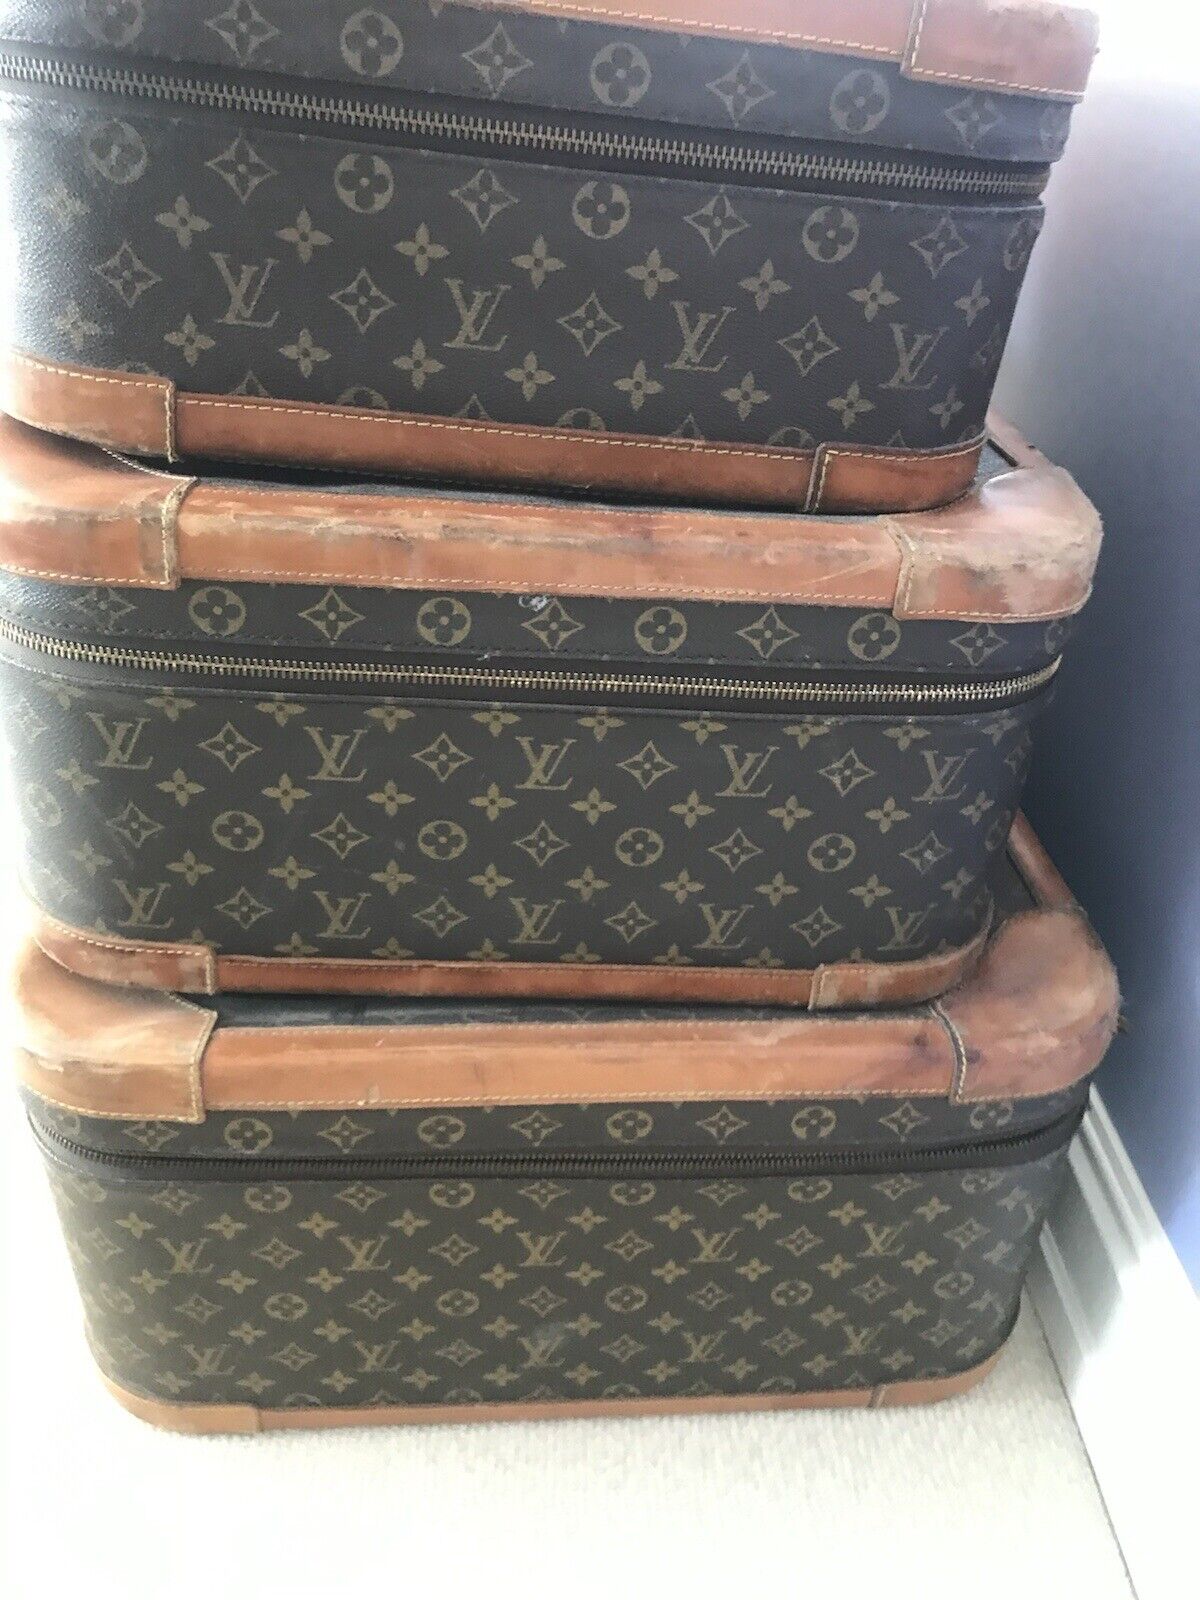 Ruby Lane 3pc Vintage Louis Vuitton Suitcases Trunks Luggage Set w Keys